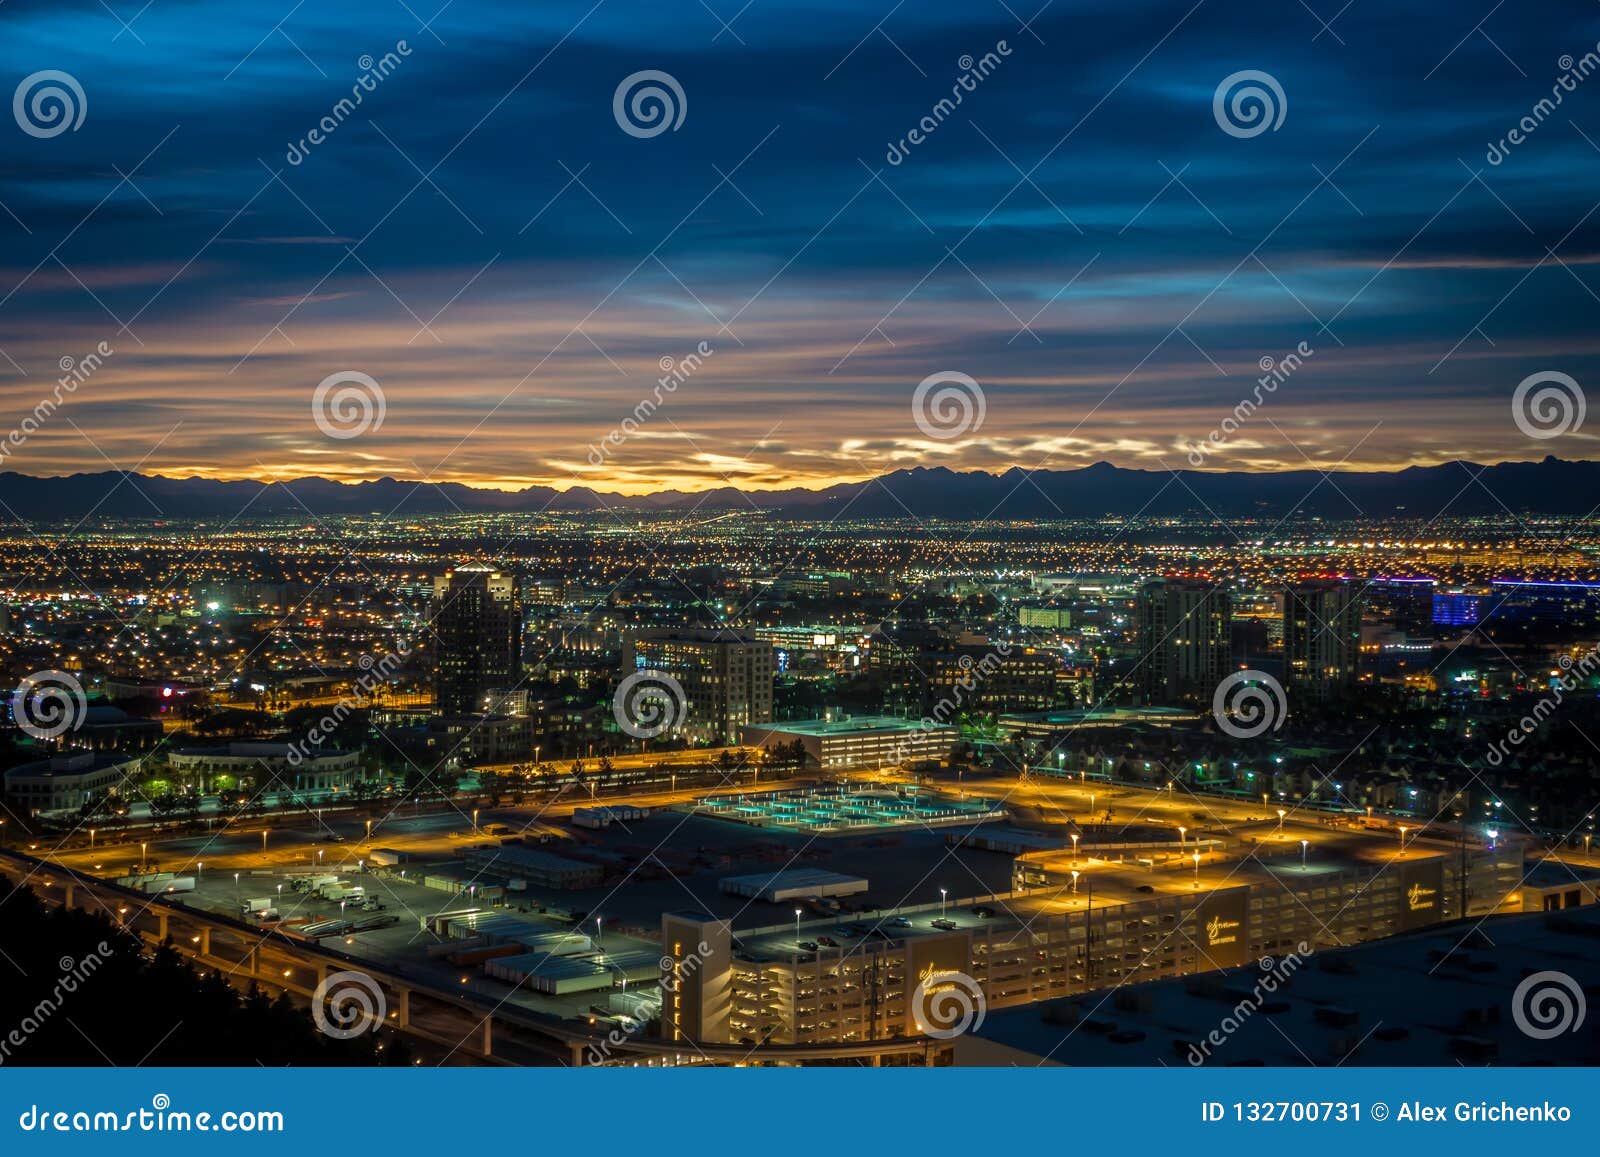 New York City Skyline In Las Vegas Nevada Photograph by Alex